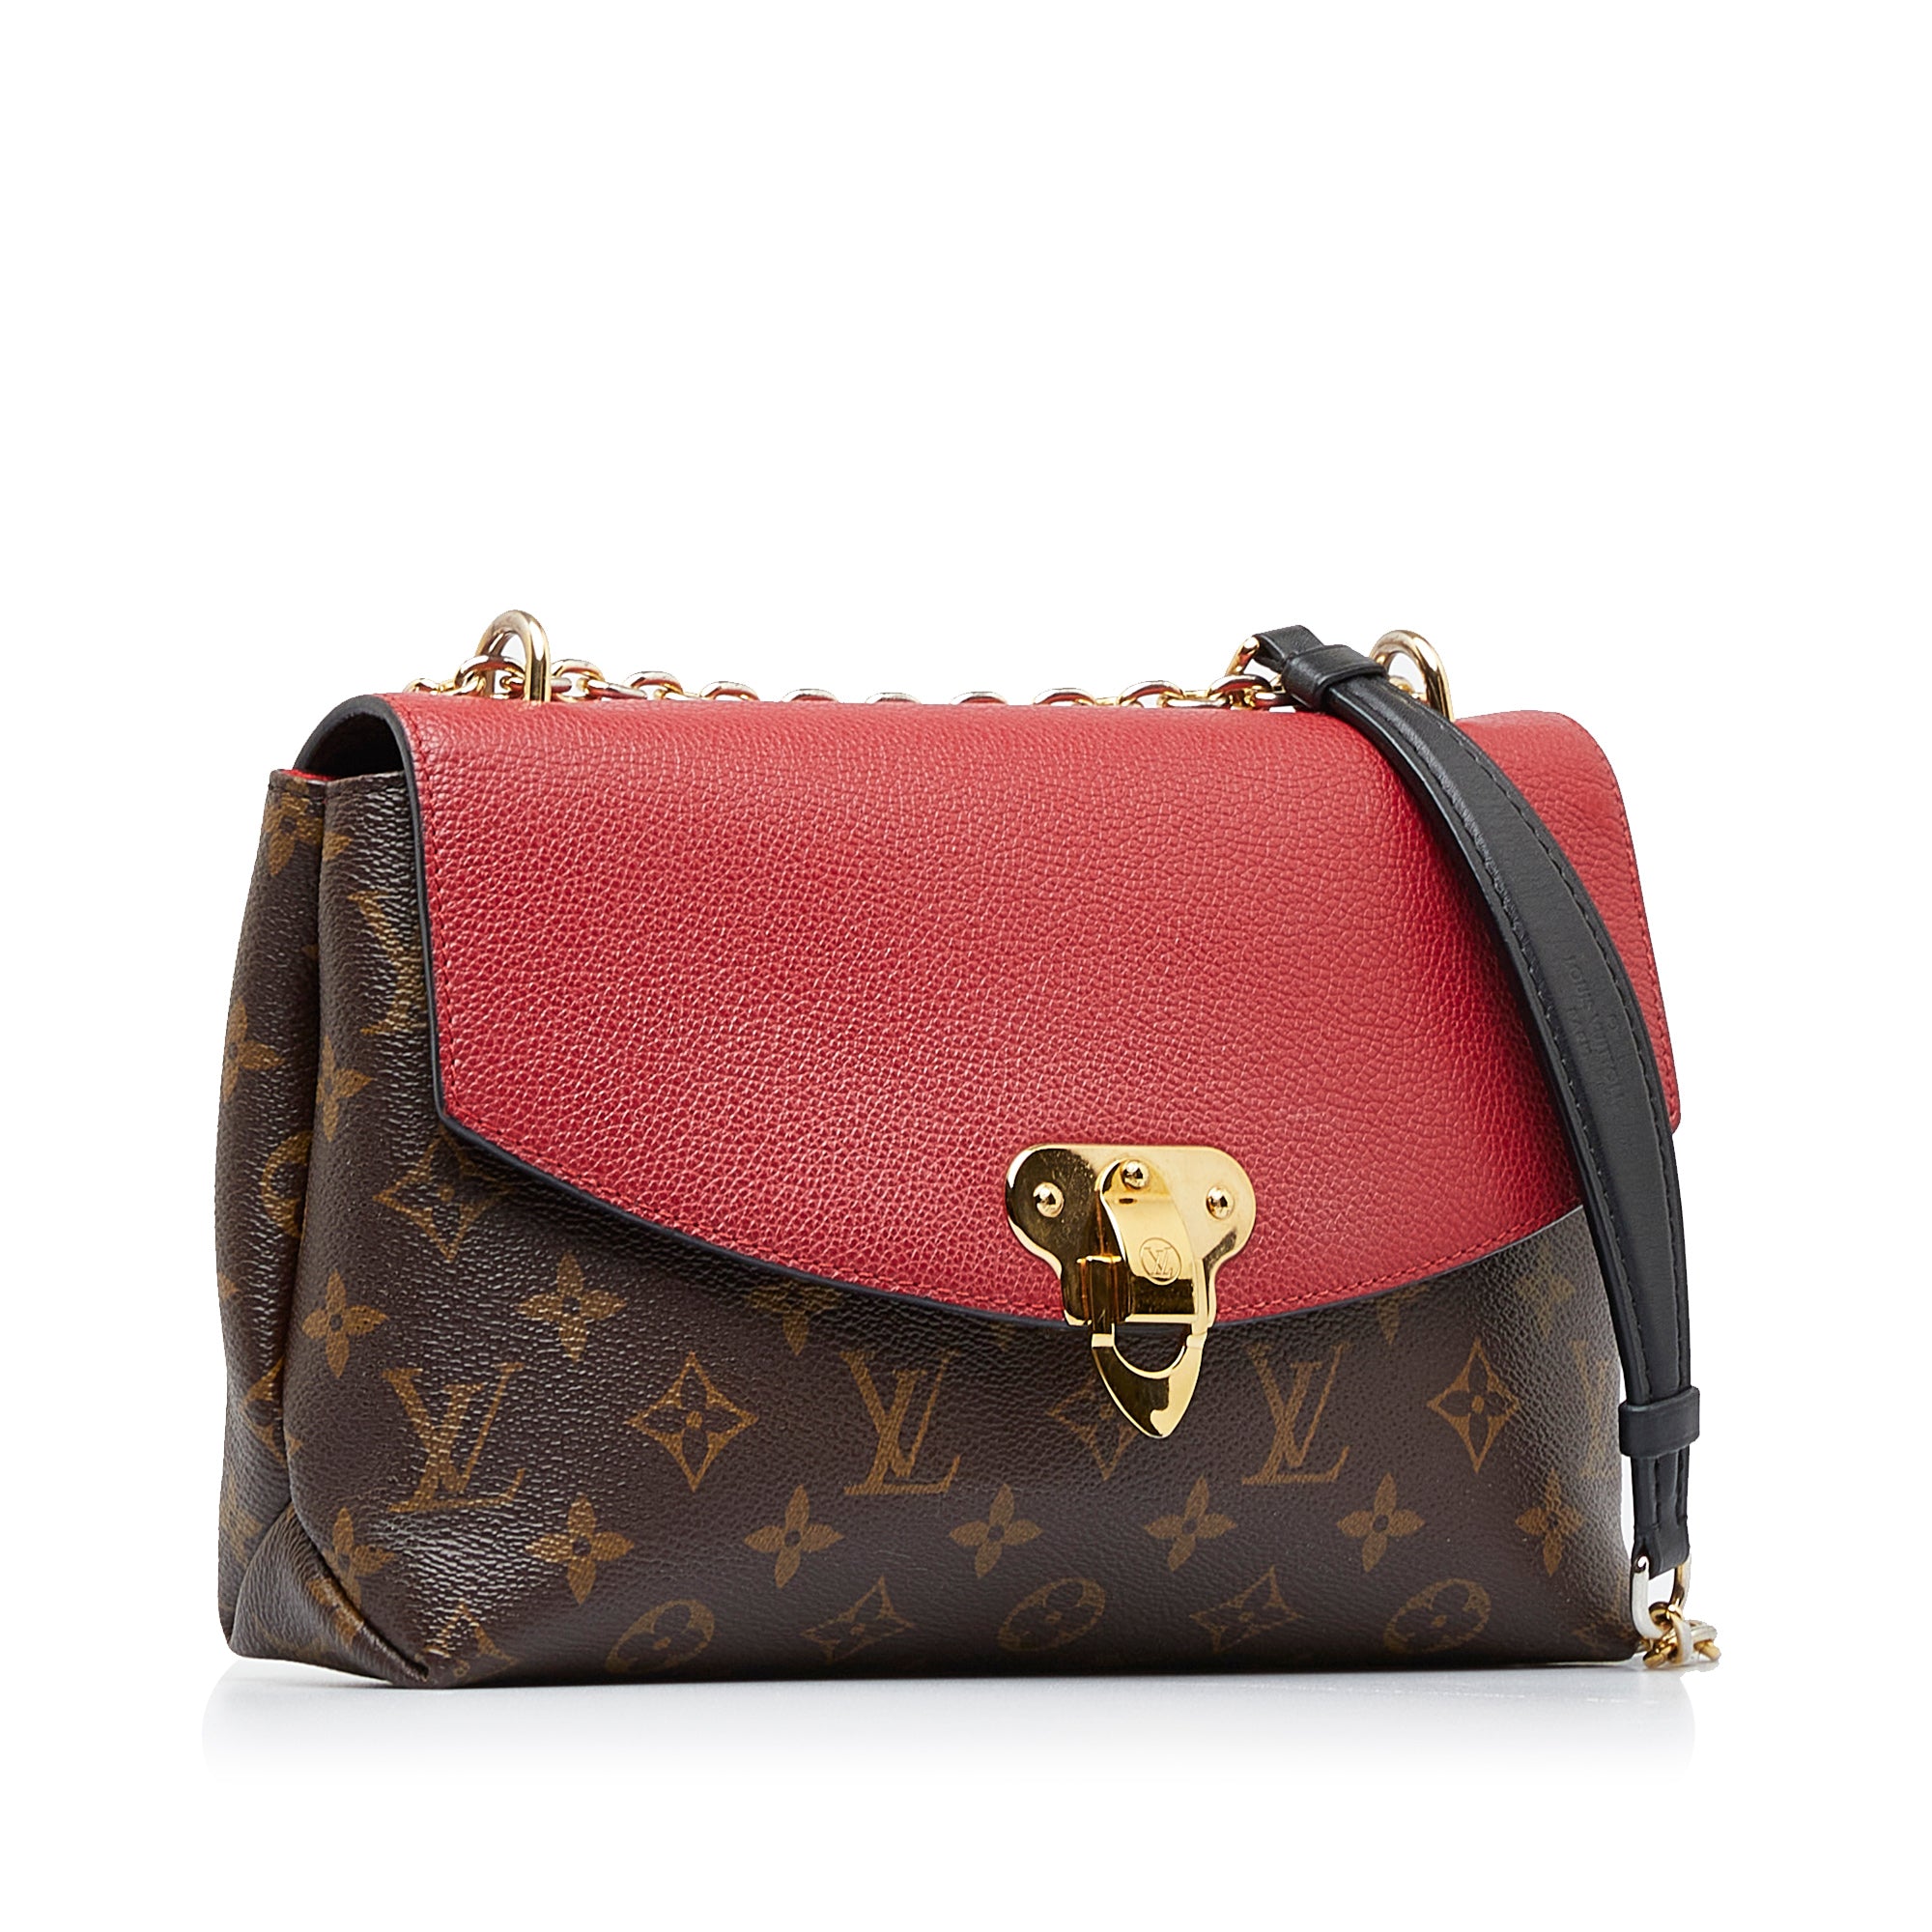 louis vuitton red and brown handbag